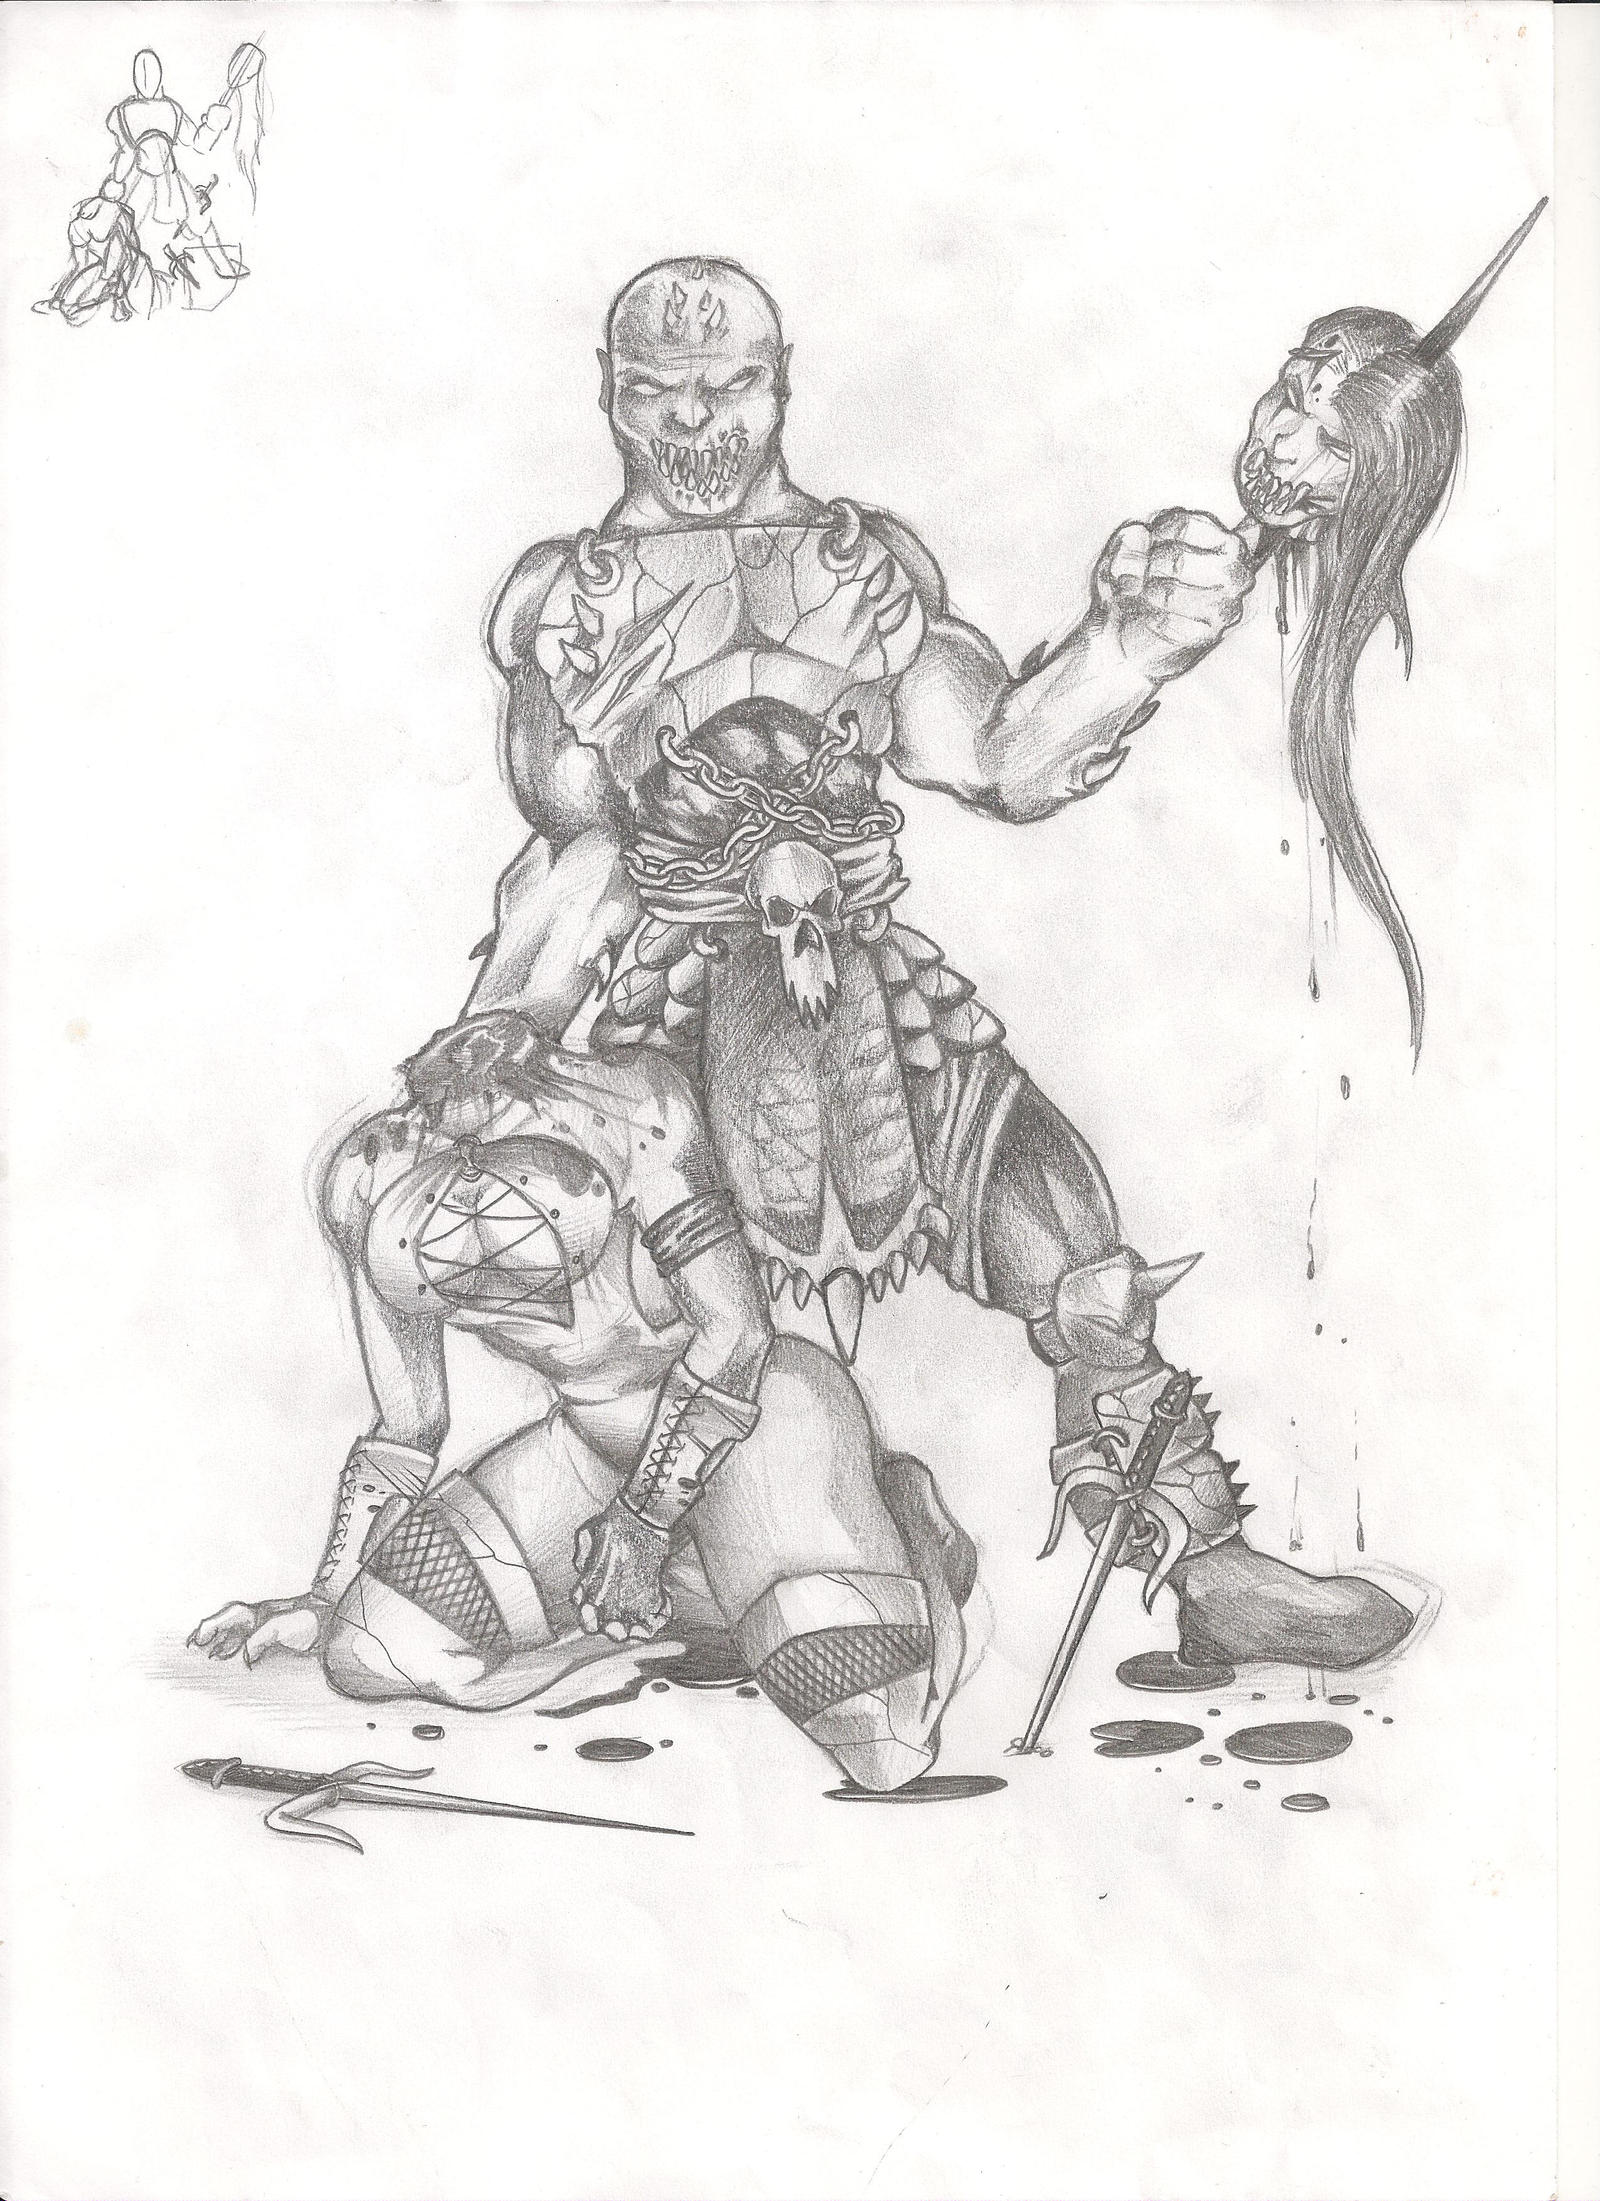 Baraka shreds Kung Lao (Fatality) by DeathColdUA on DeviantArt